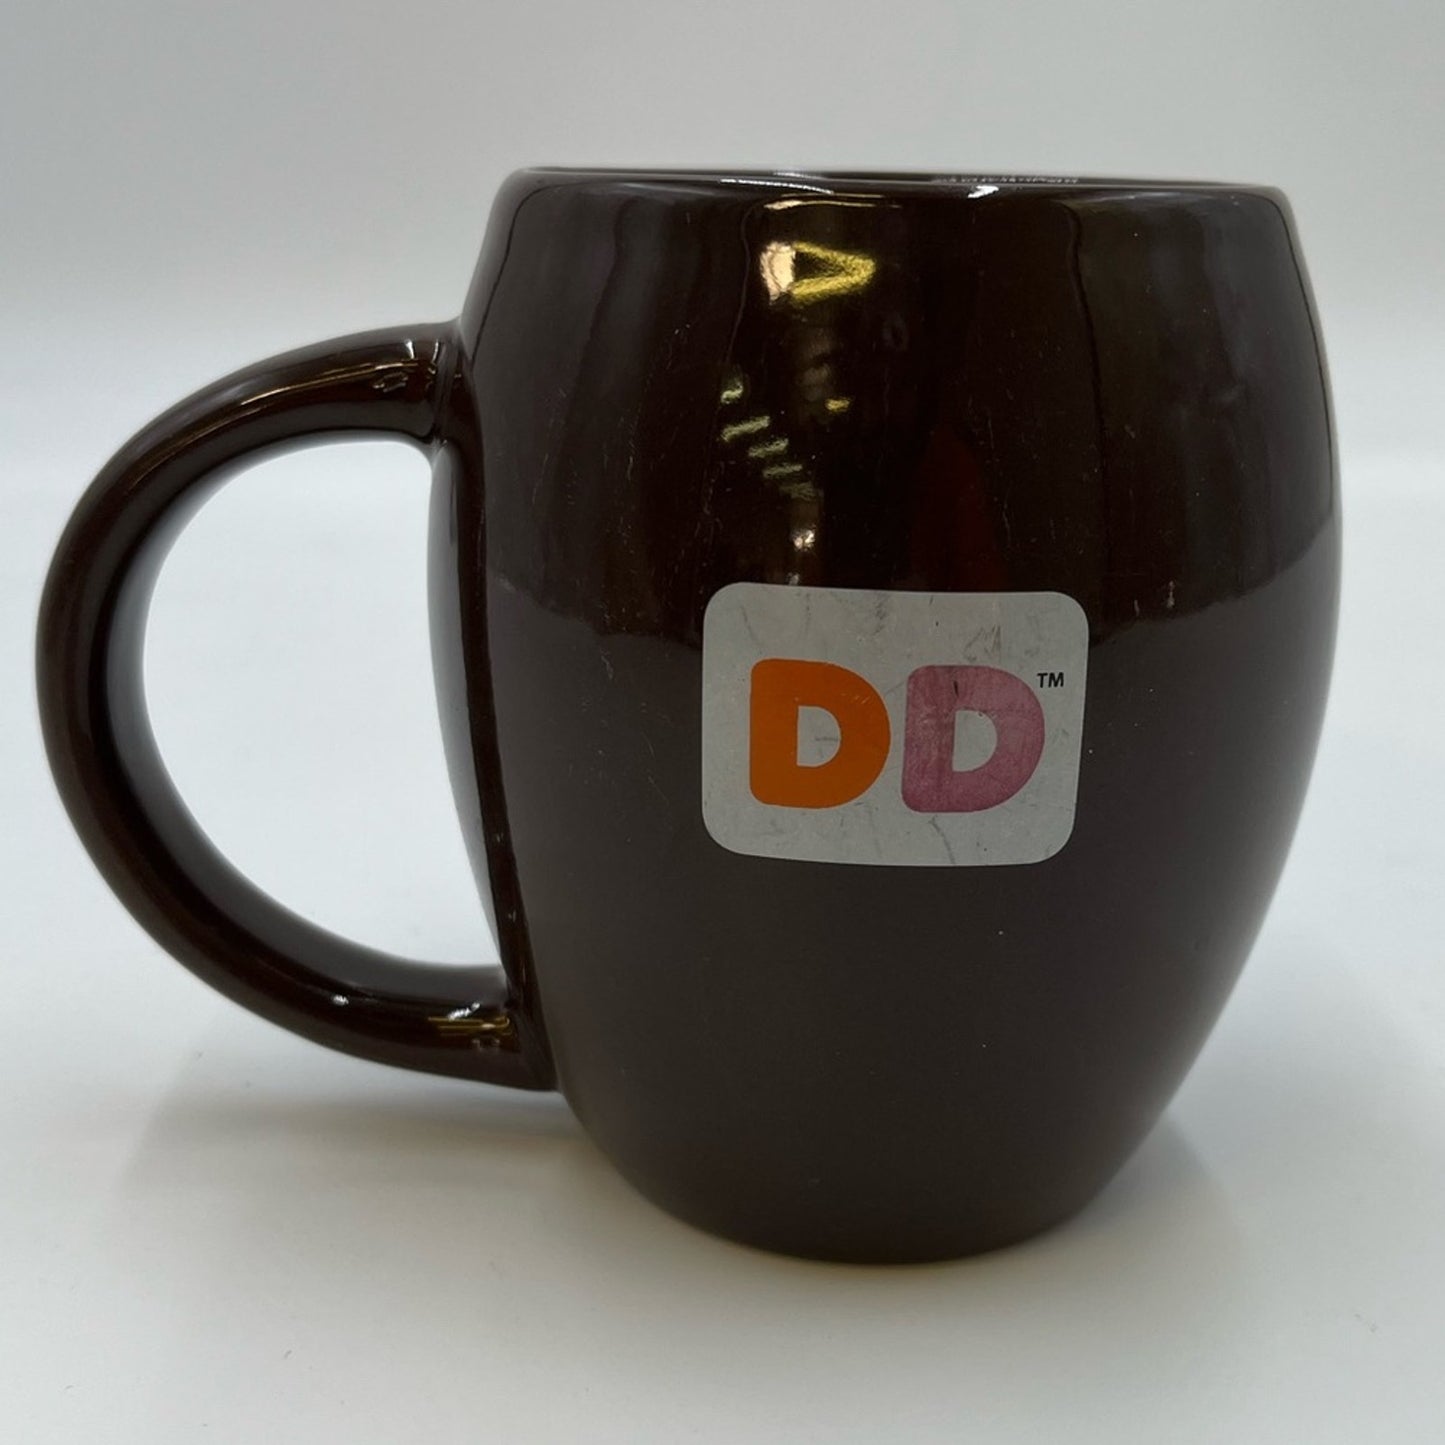 Dunkin Donuts brown rounded coffee tea mug